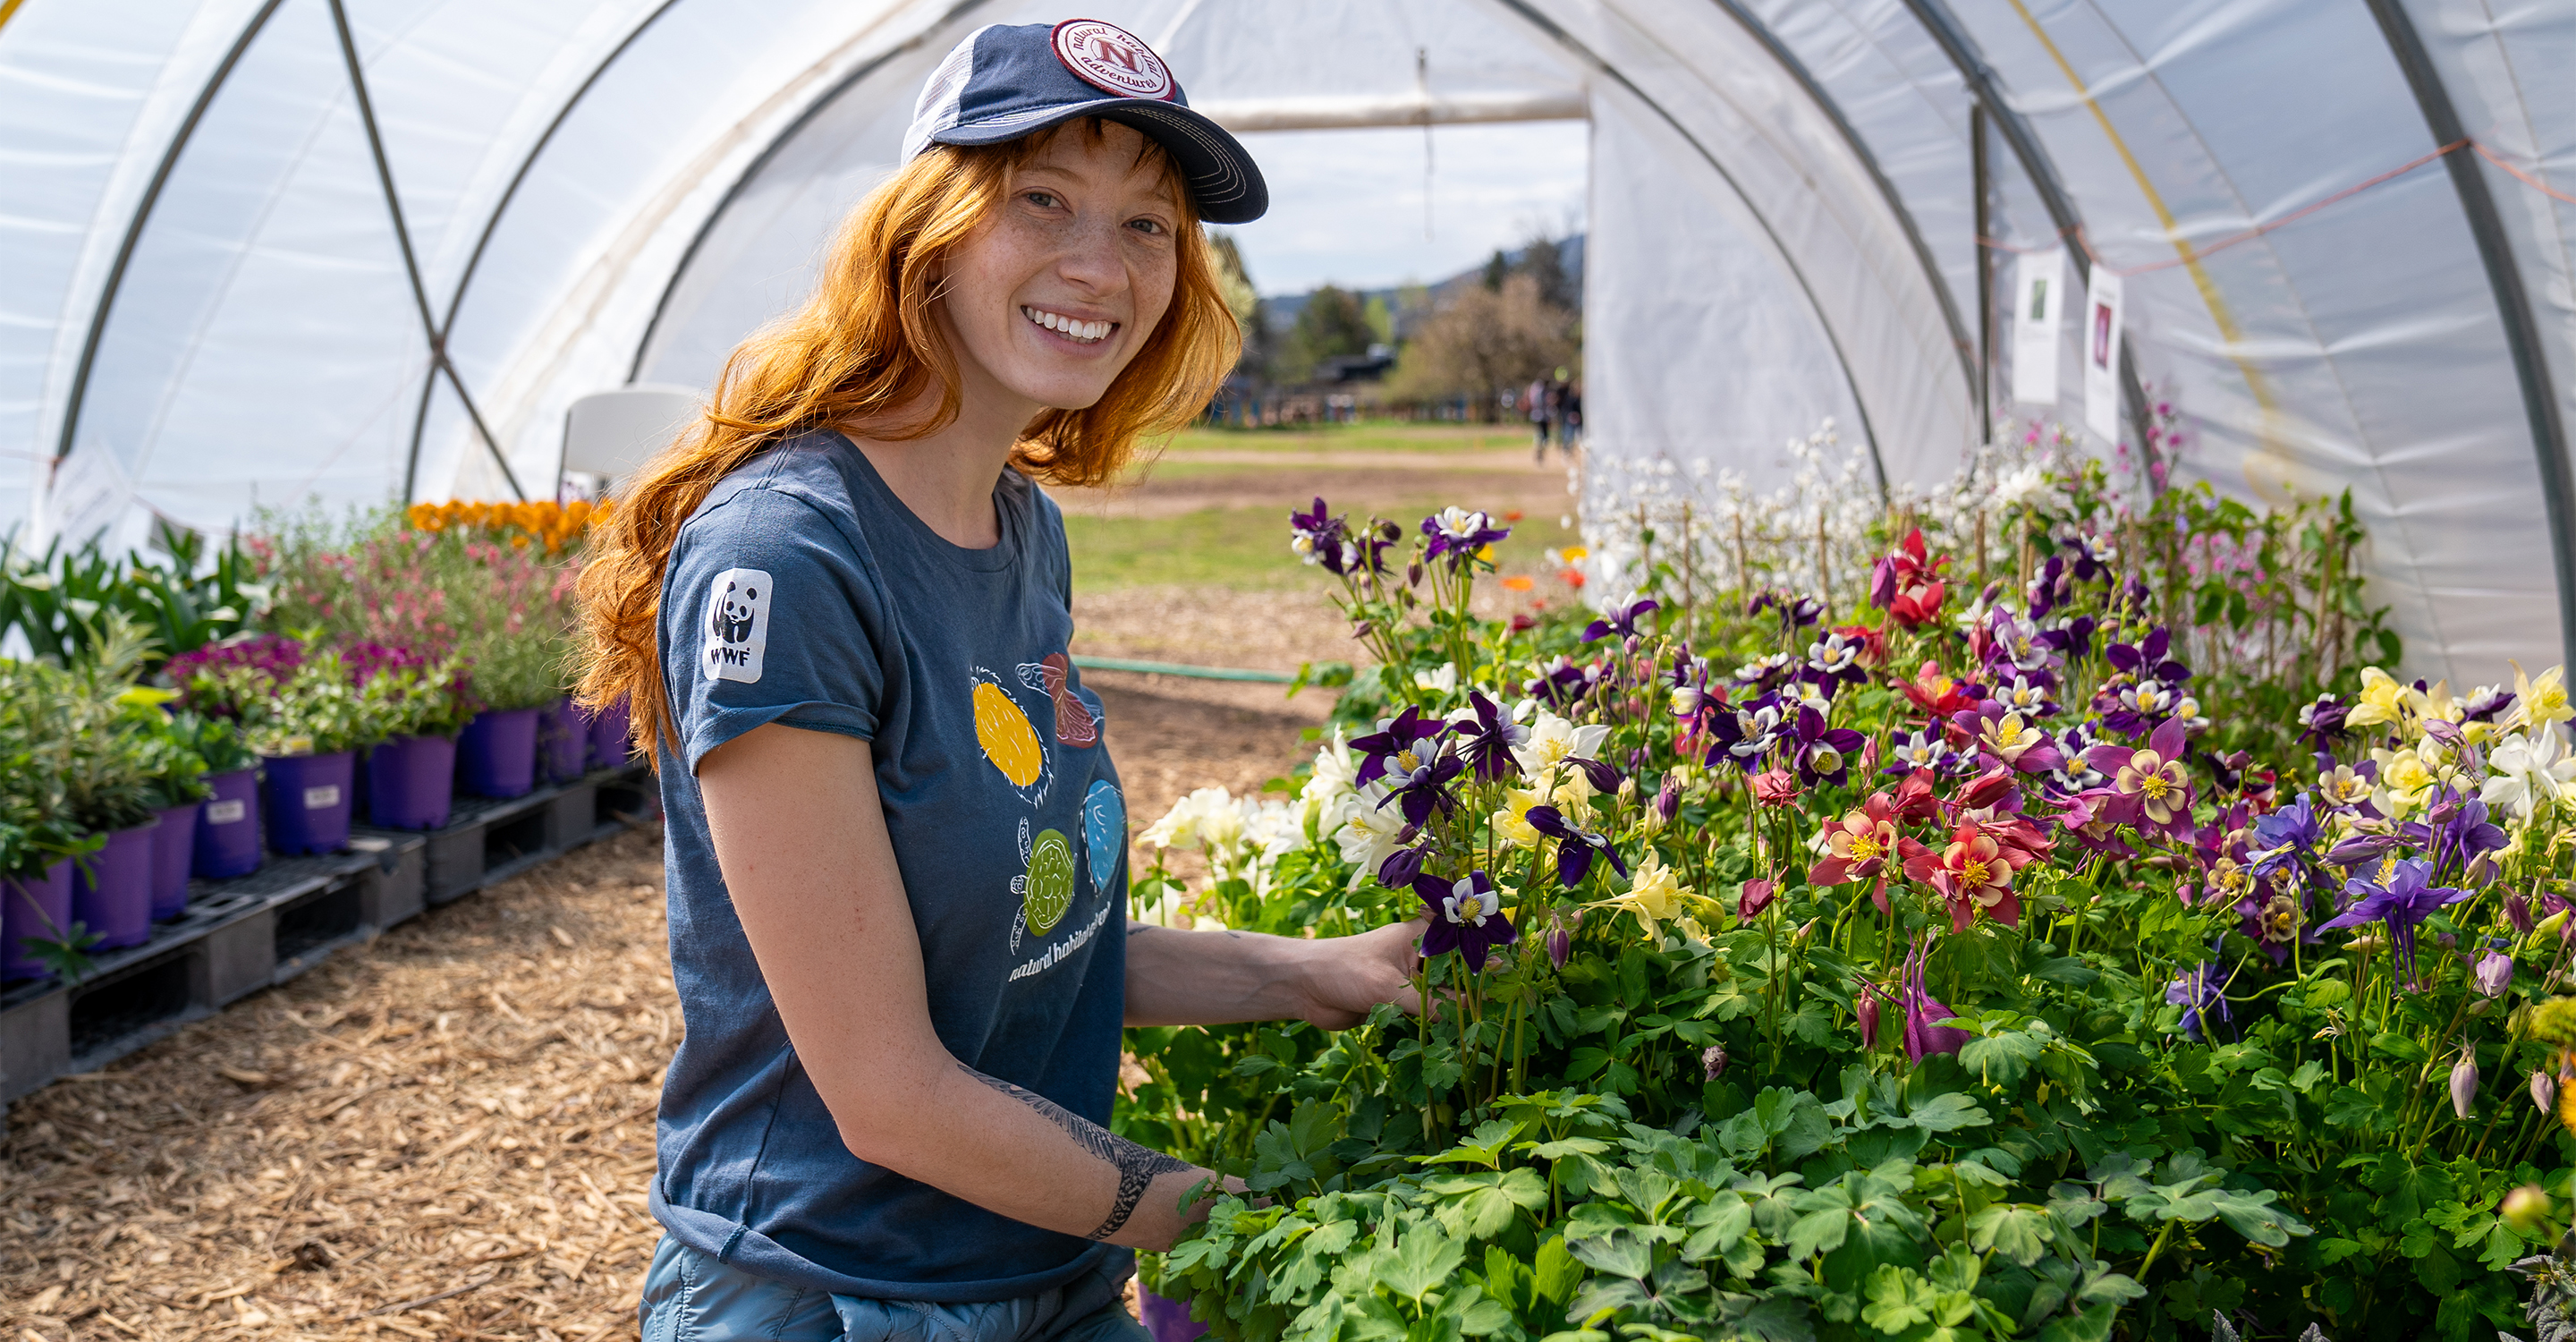 Volunteering at Growing Gardens